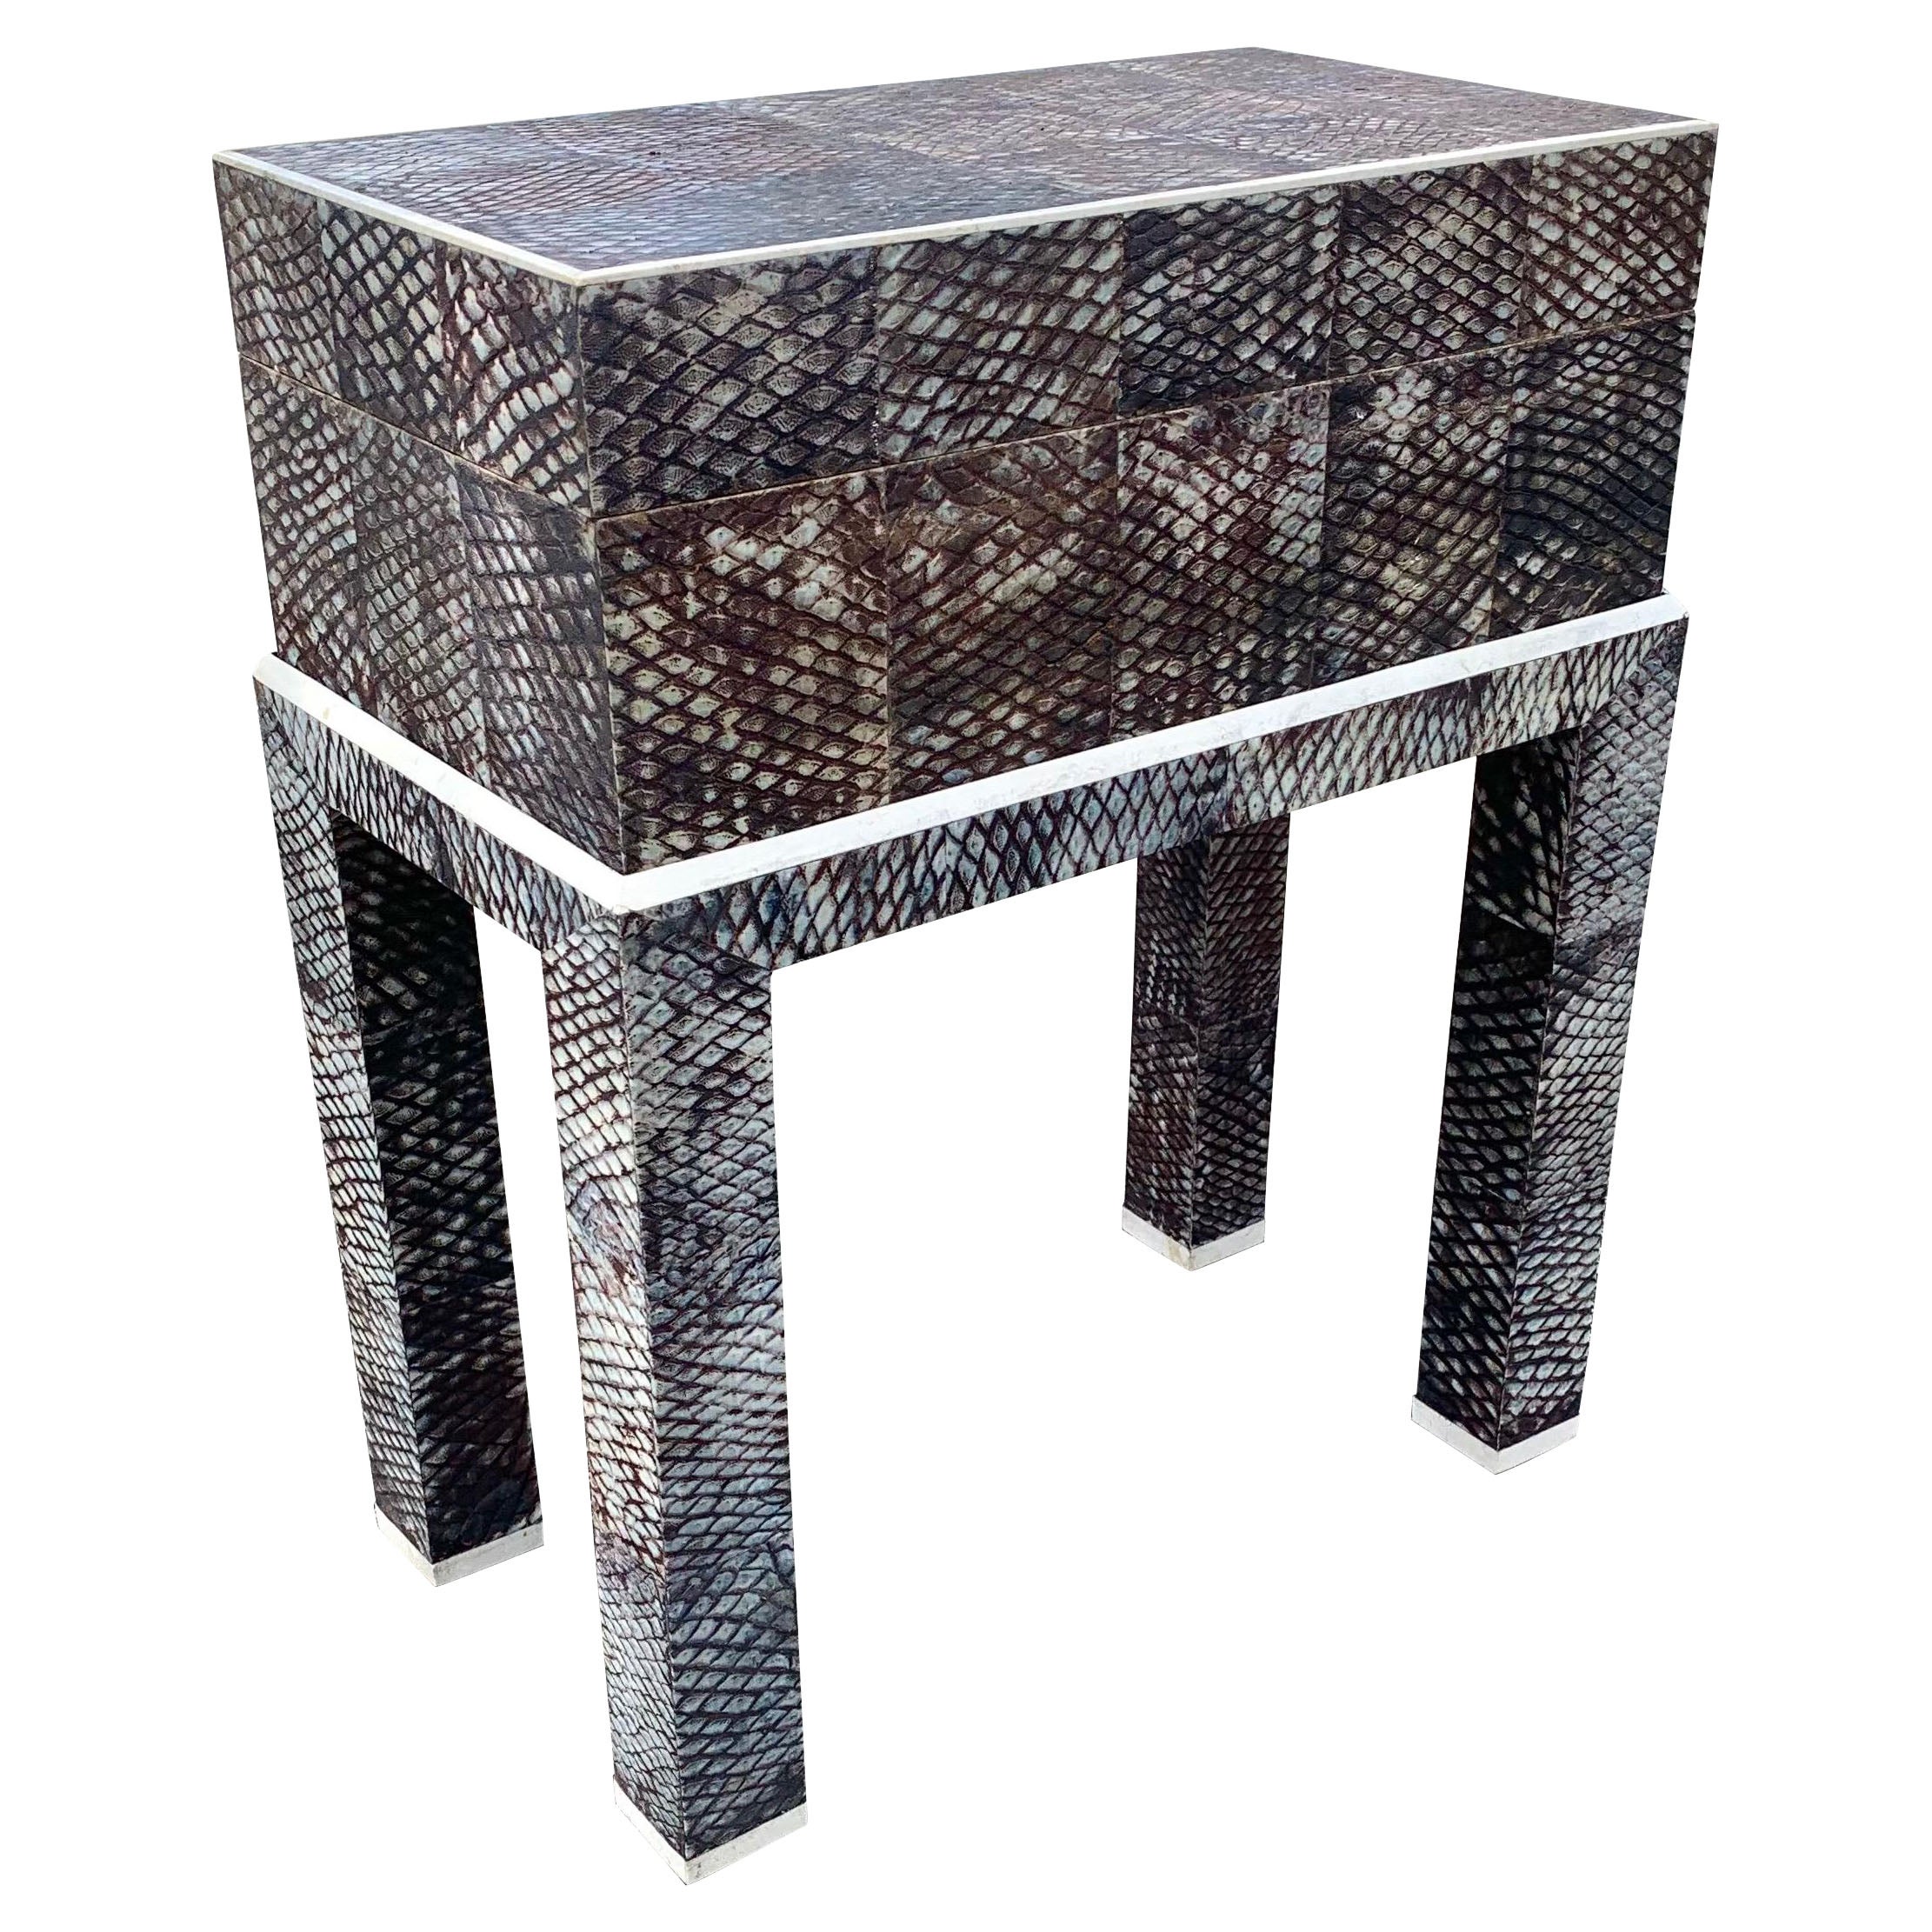 Maitland Smith Decorative Grey Snakeskin Box and Stand